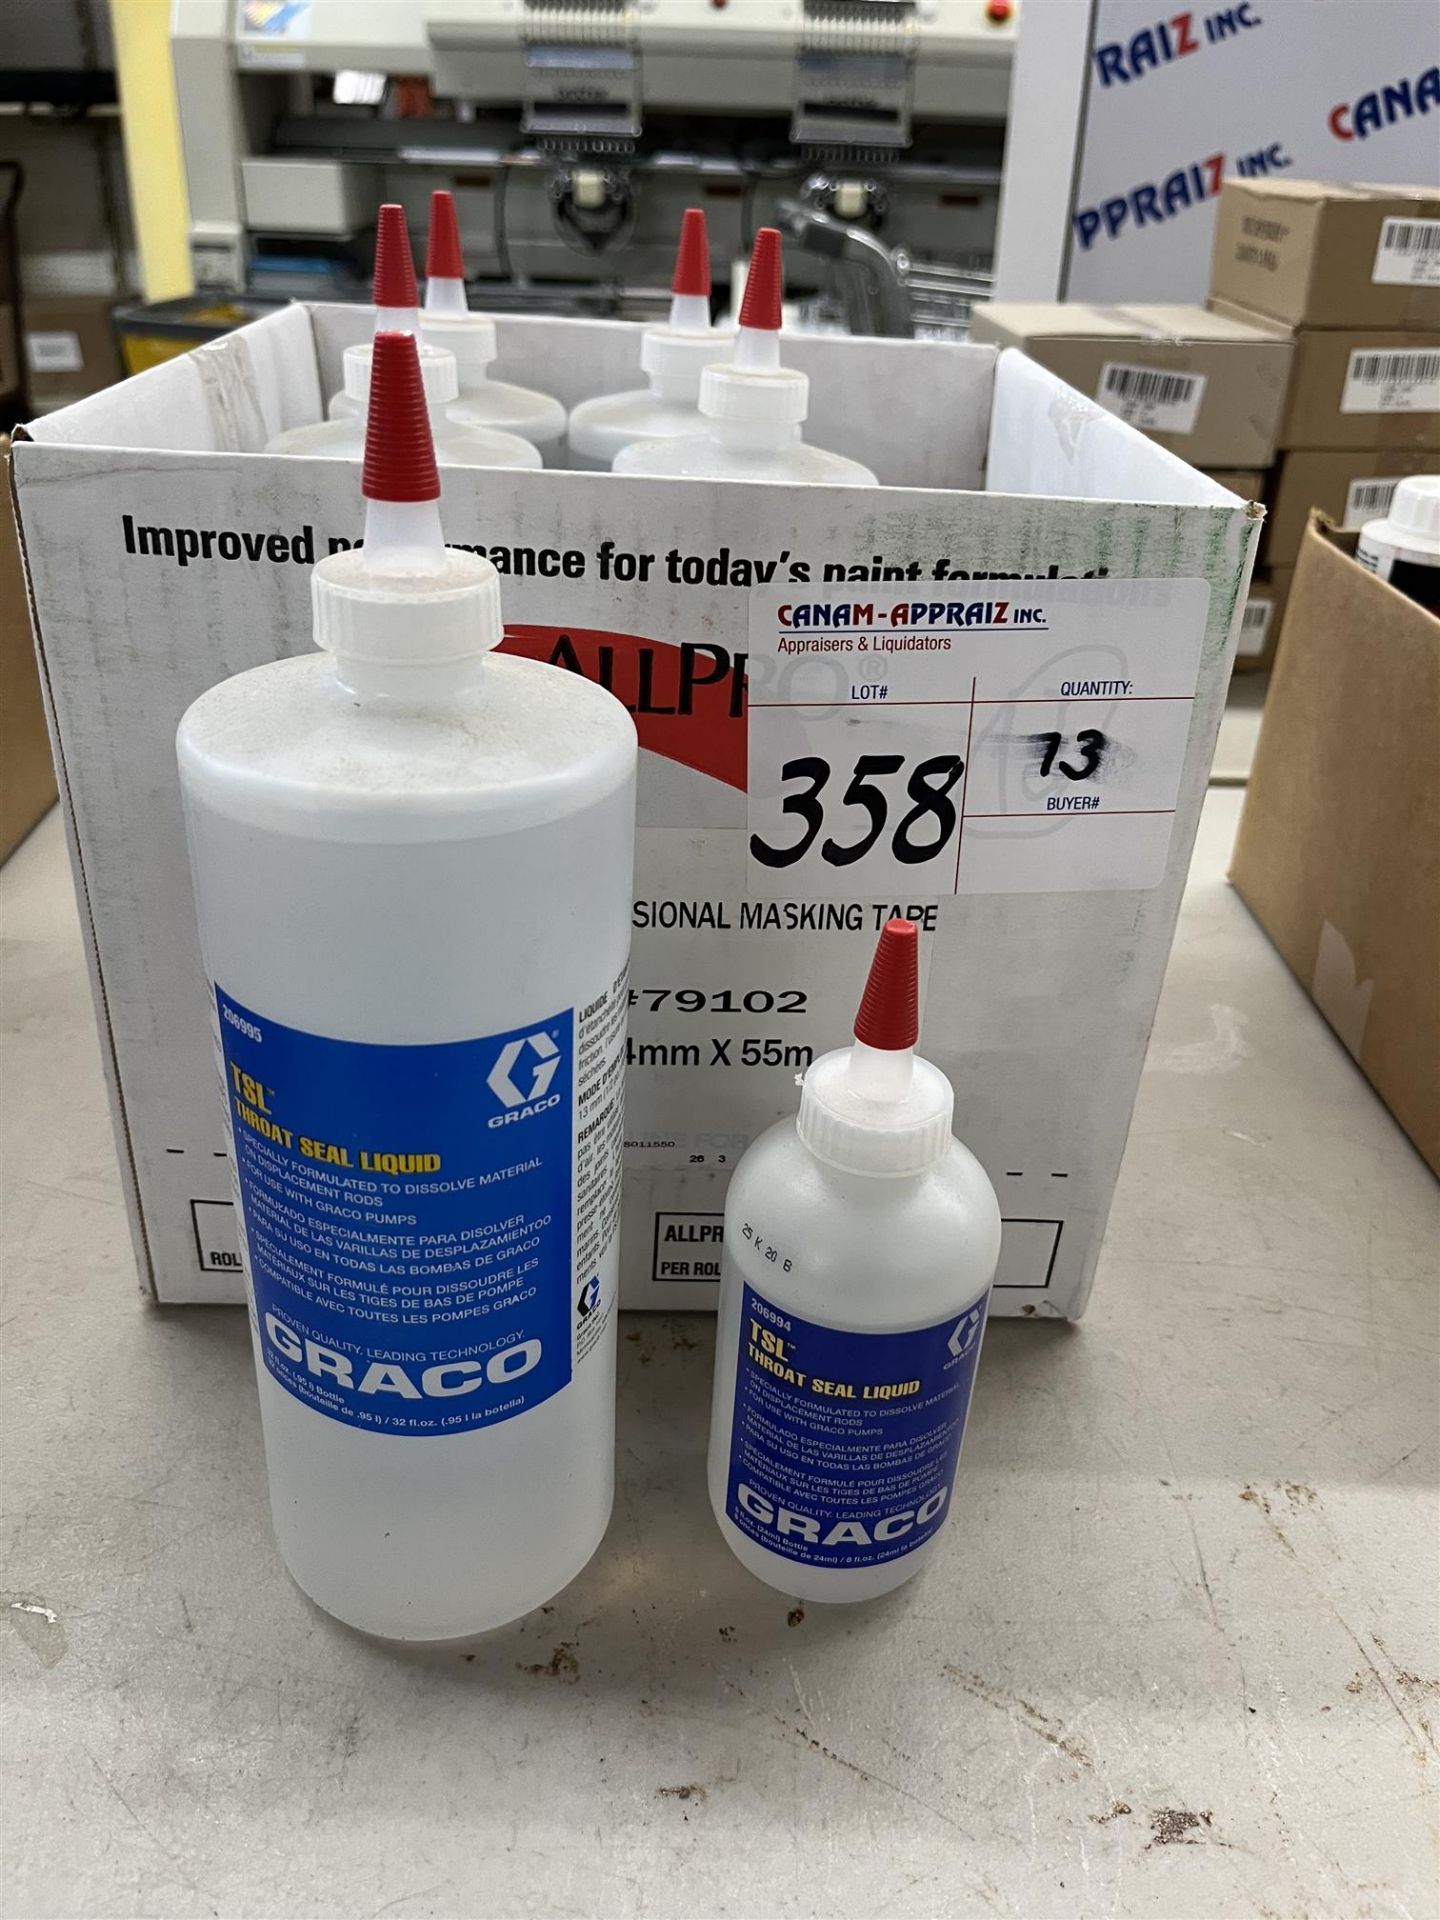 GRACO - Throat Seal Liquid - Quantity: x13